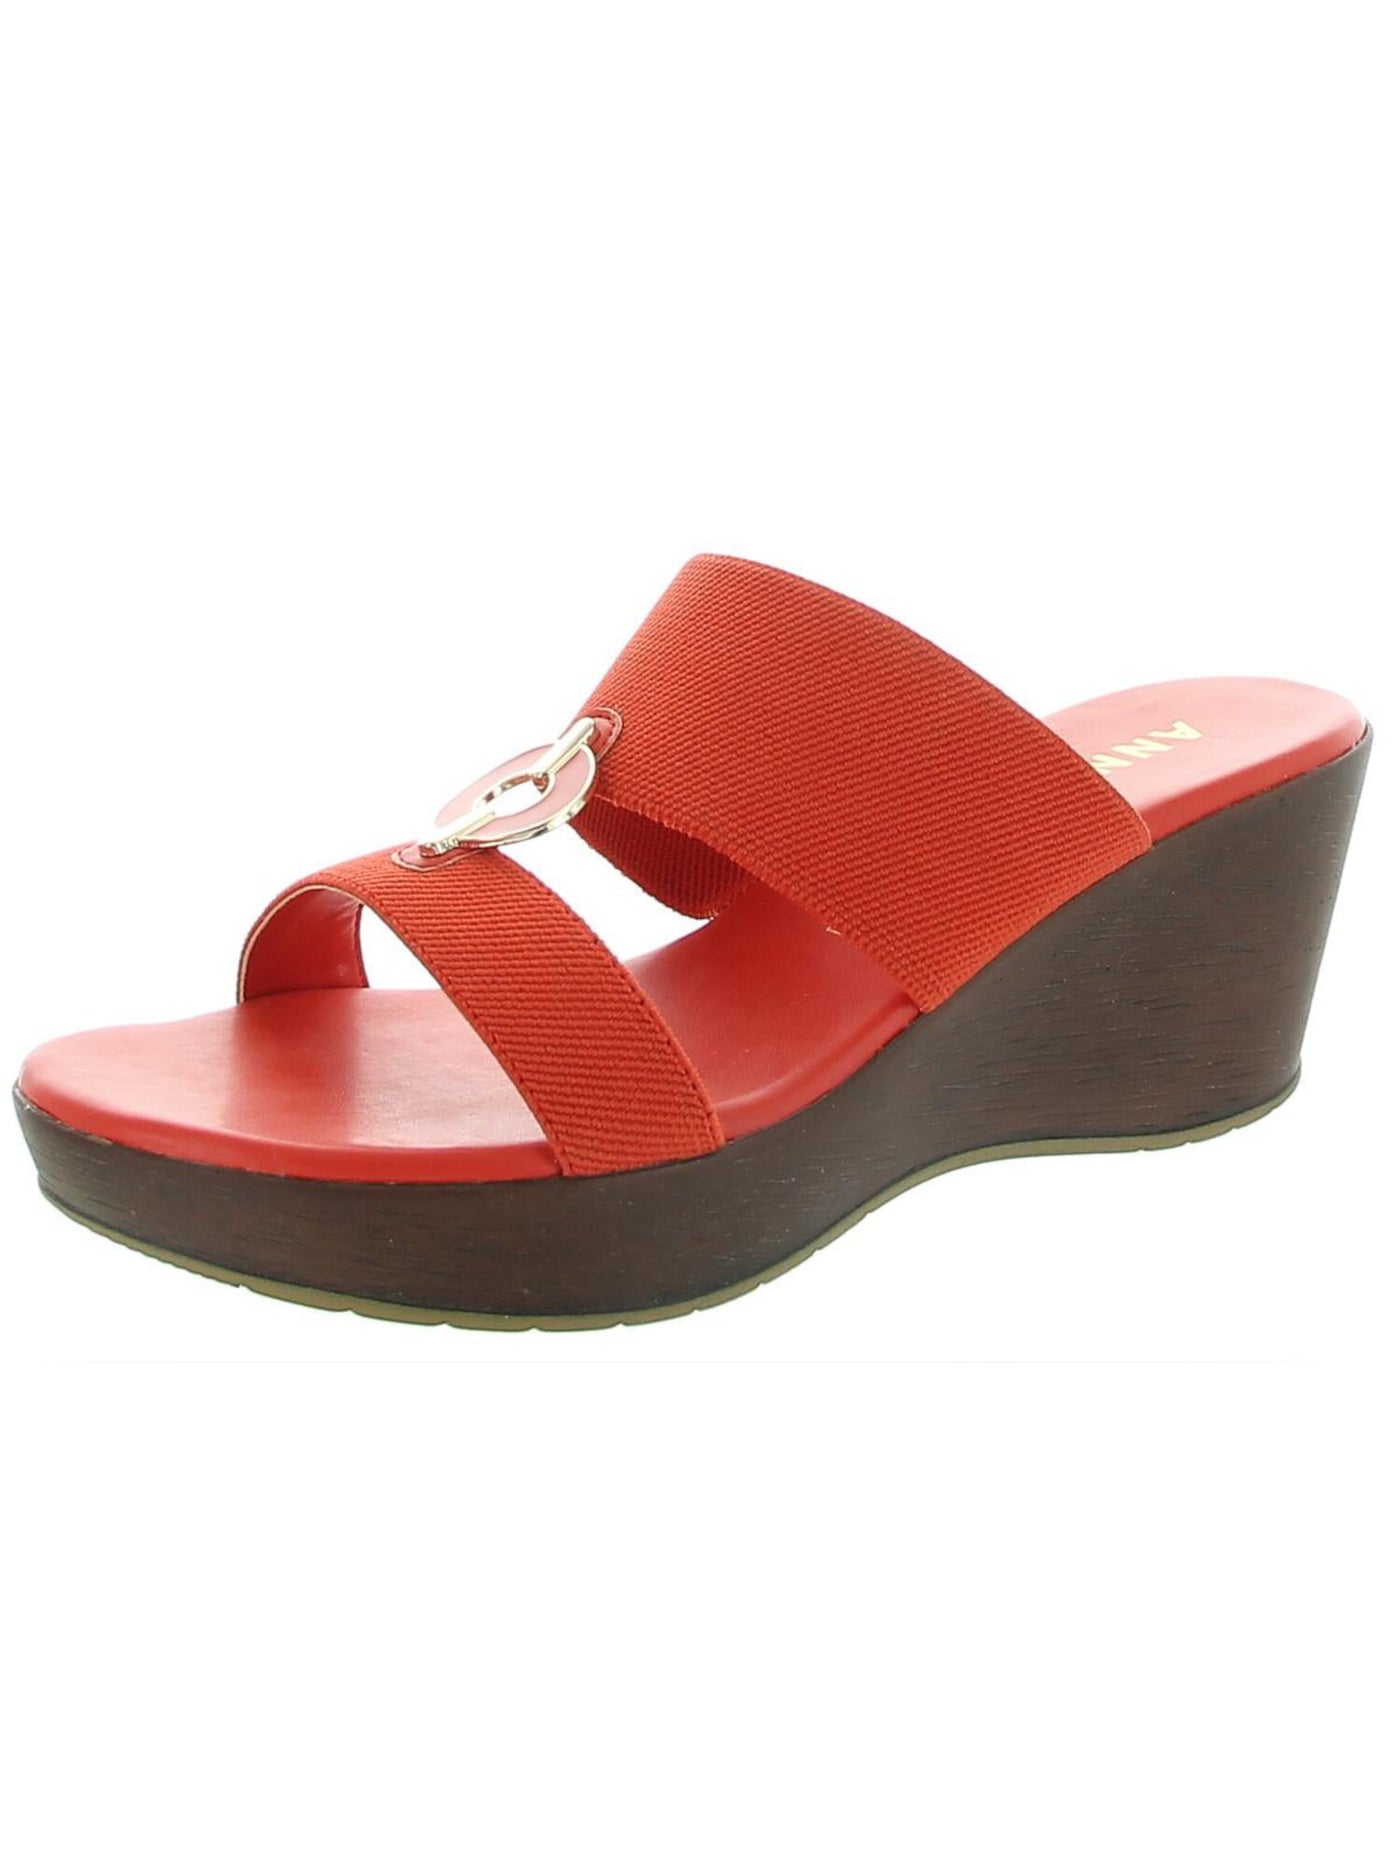 ANNE KLEIN Womens Coral Ribbed 1" Platform Embellished Metallic O-Ring Padded Stretch Hadya Round Toe Wedge Slip On Slide Sandals Shoes 11